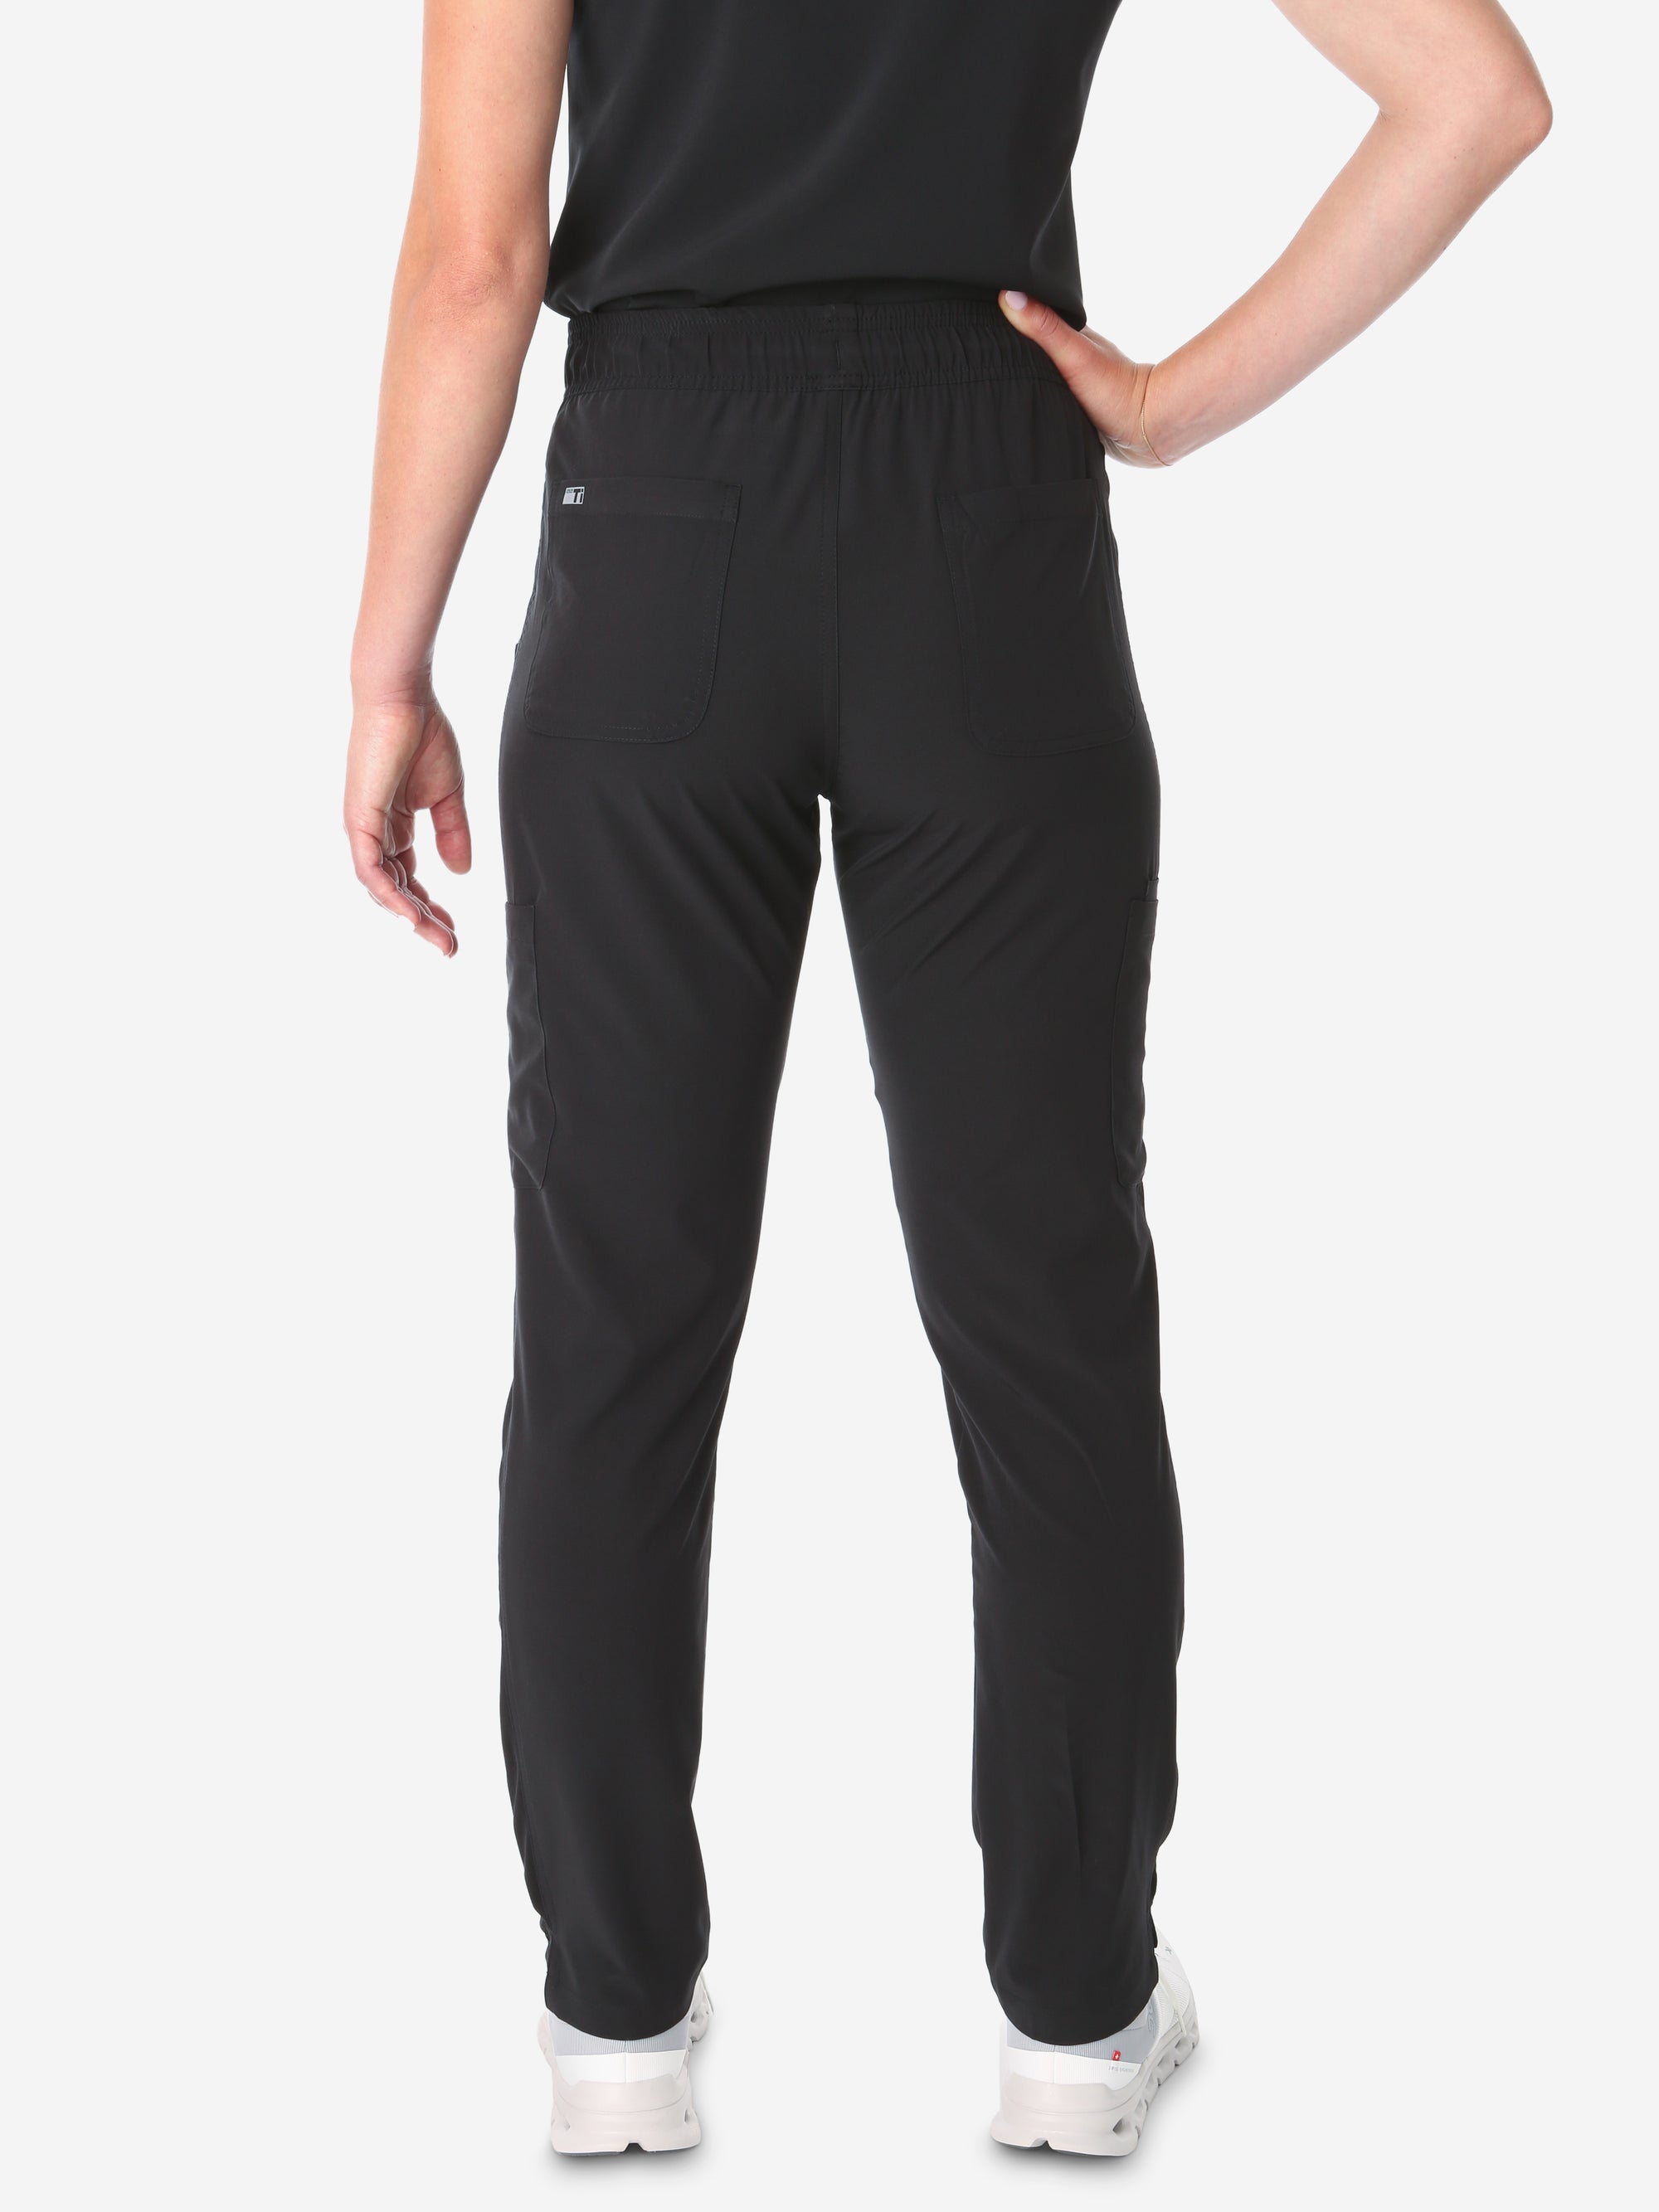 TiScrubs Real Black Women's Stretch 9-Pocket Pants Back View Pants Only